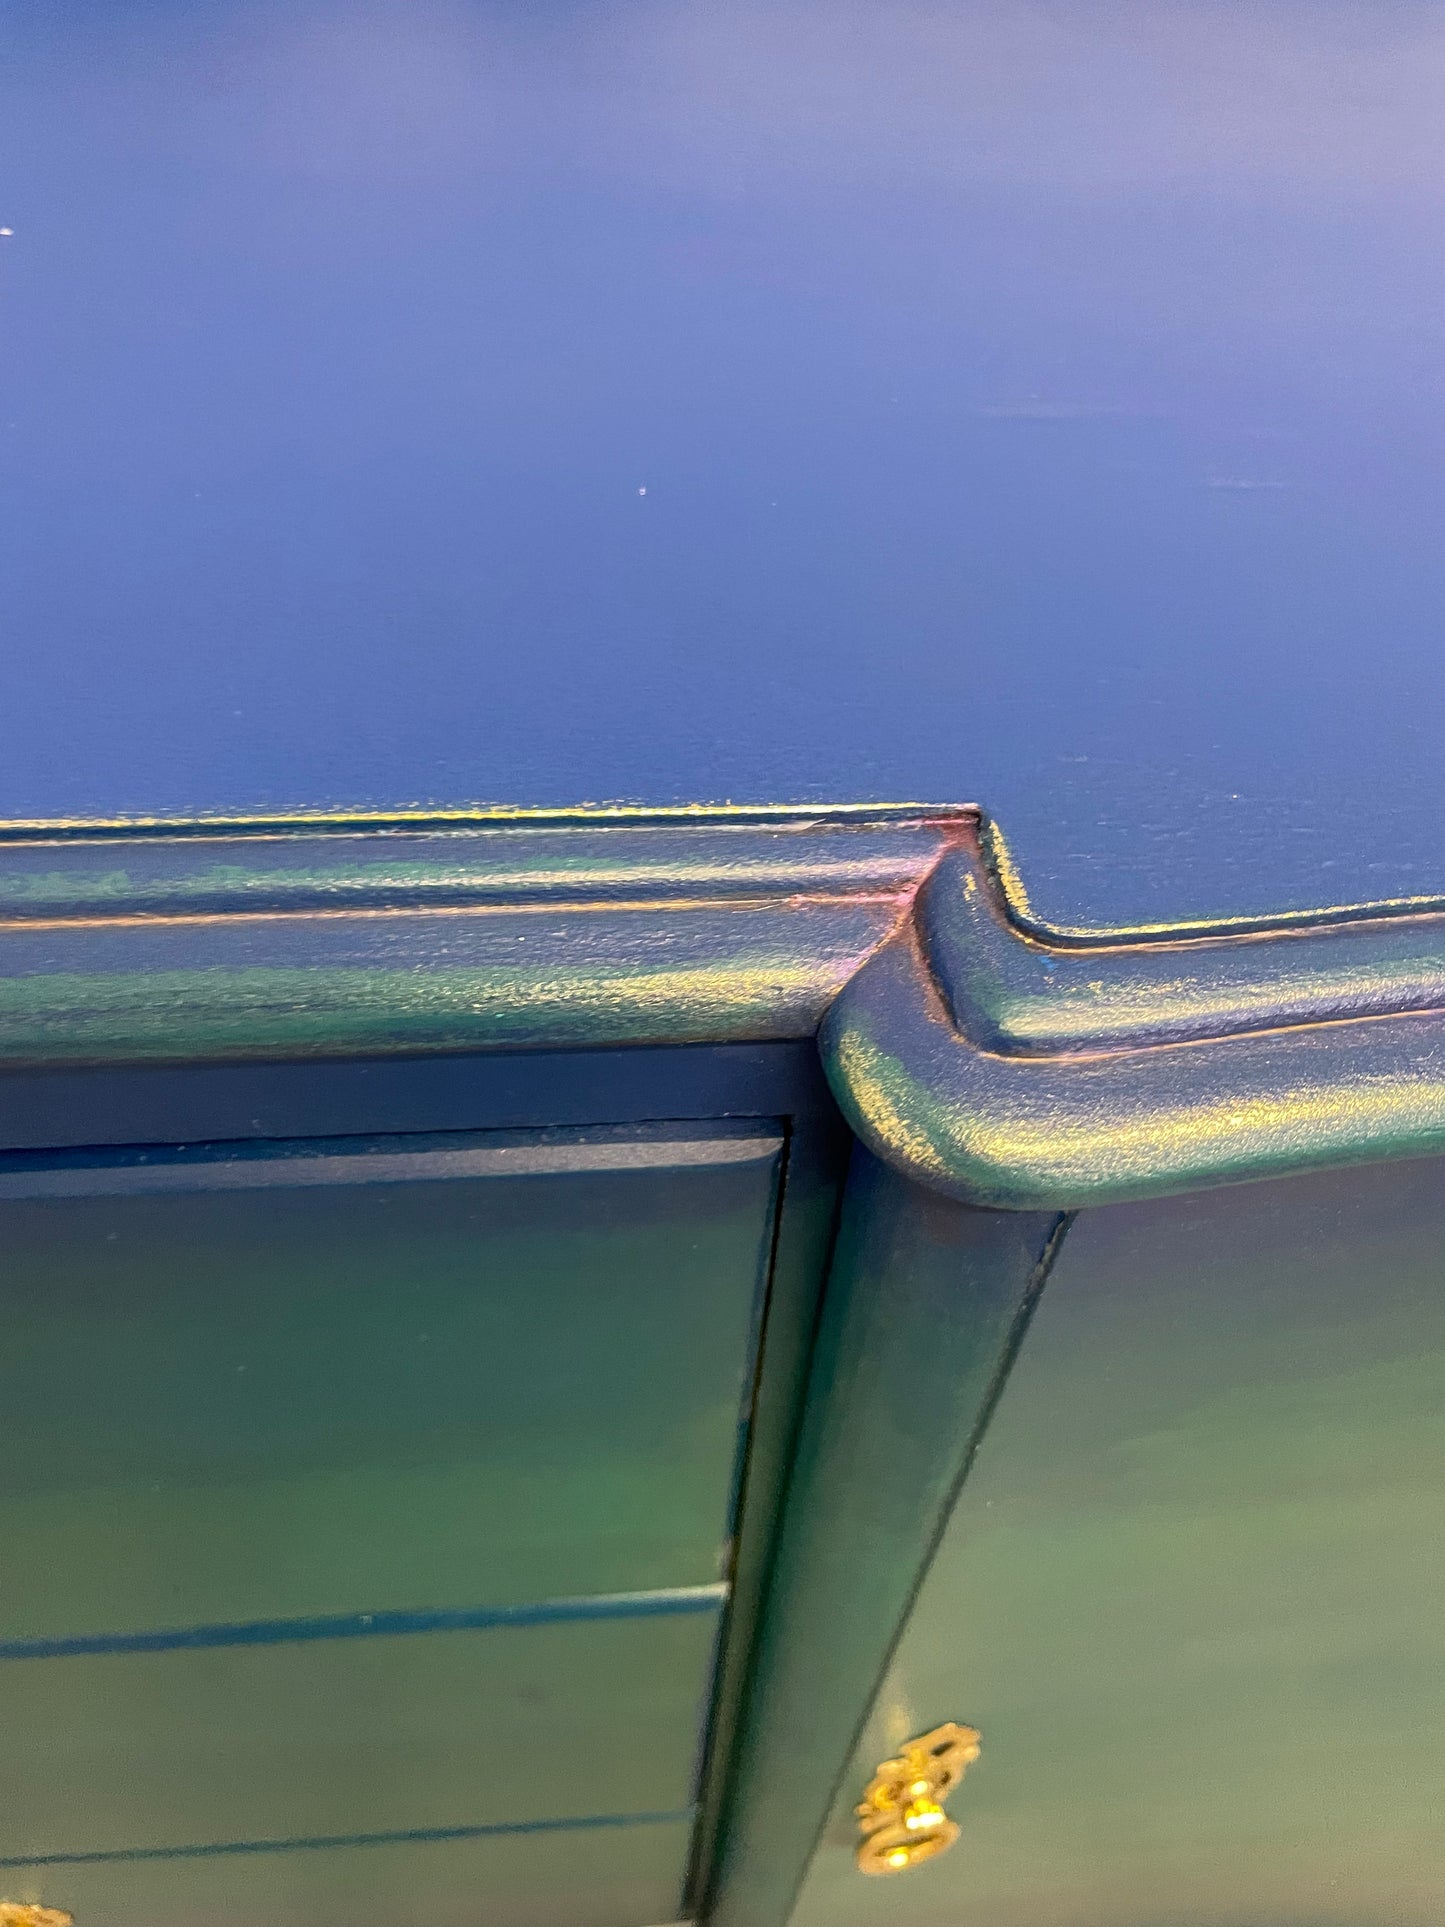 Vintage Harris Lebus Green Blue Sideboard, Queen Anne Style Sideboard